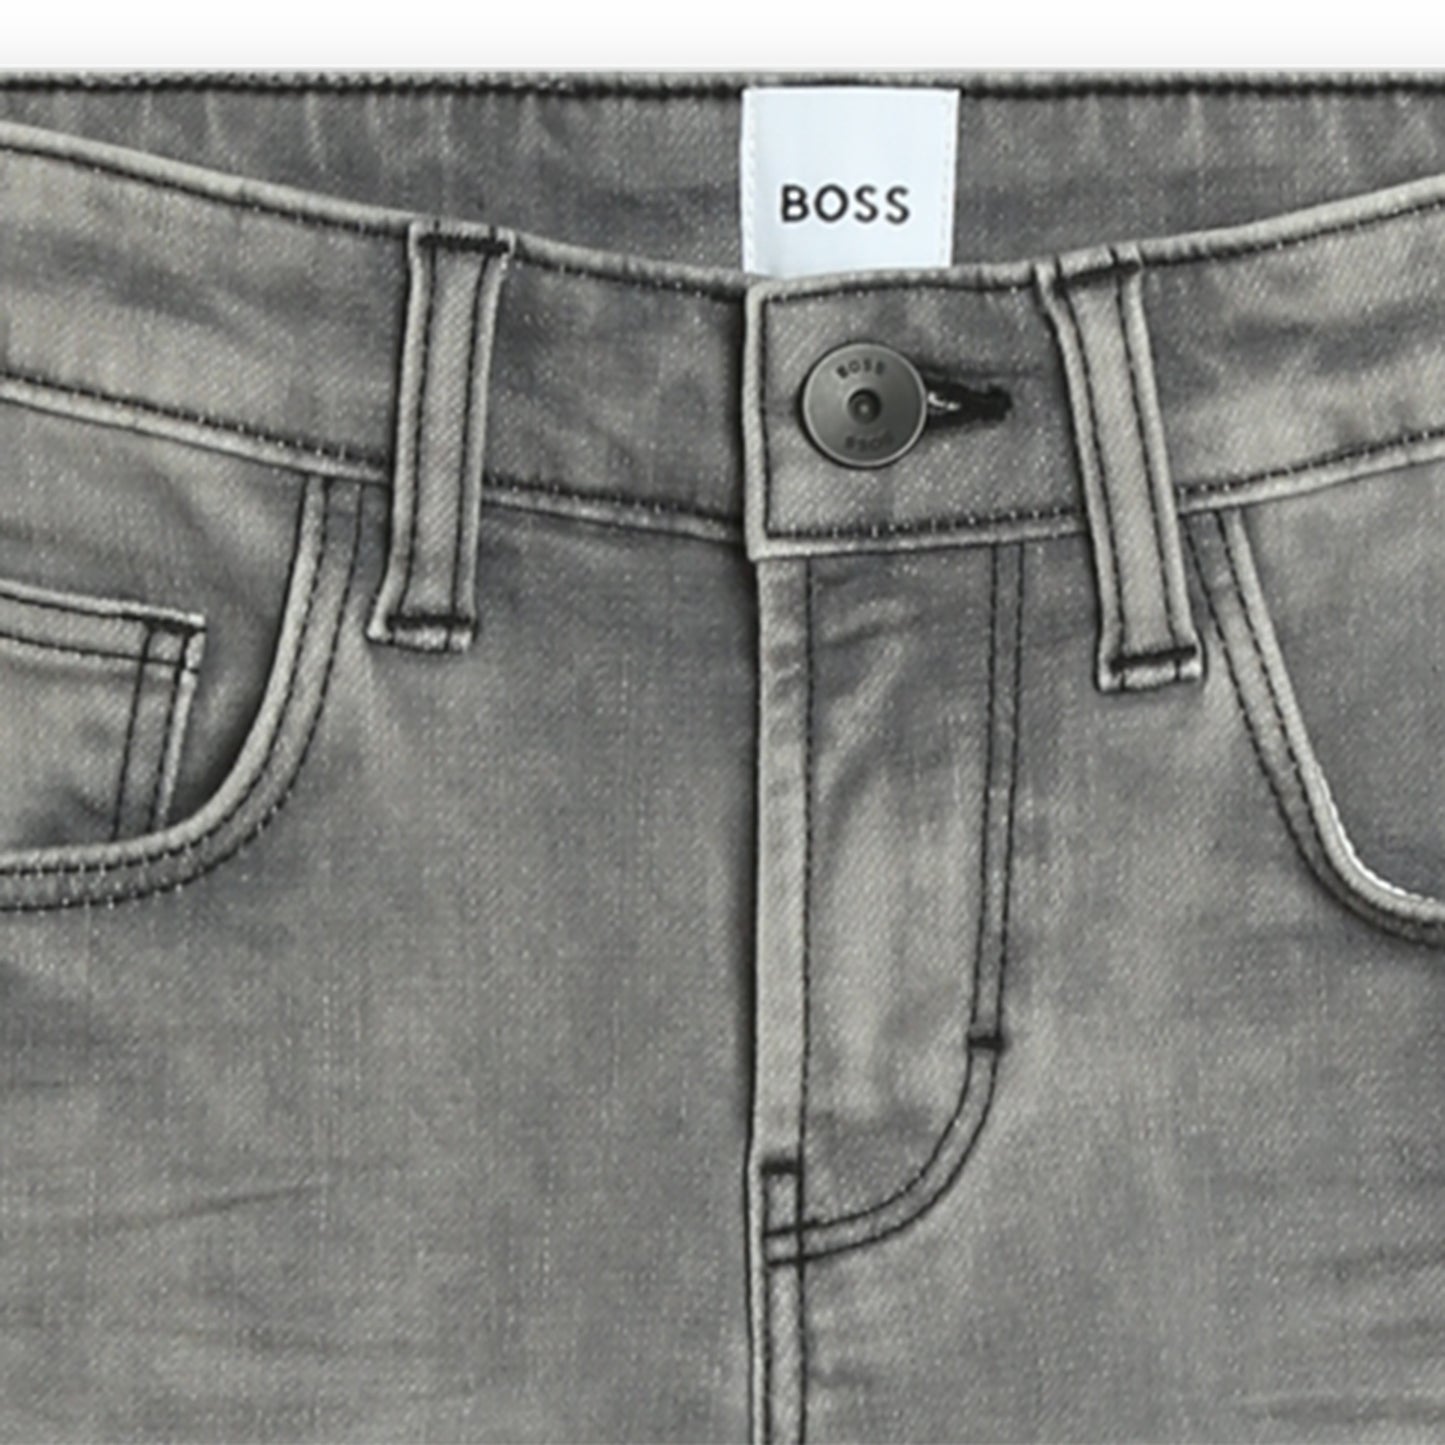 Hugo Boss Boys Regular Fit Grey Jeans_ J50688-Z20